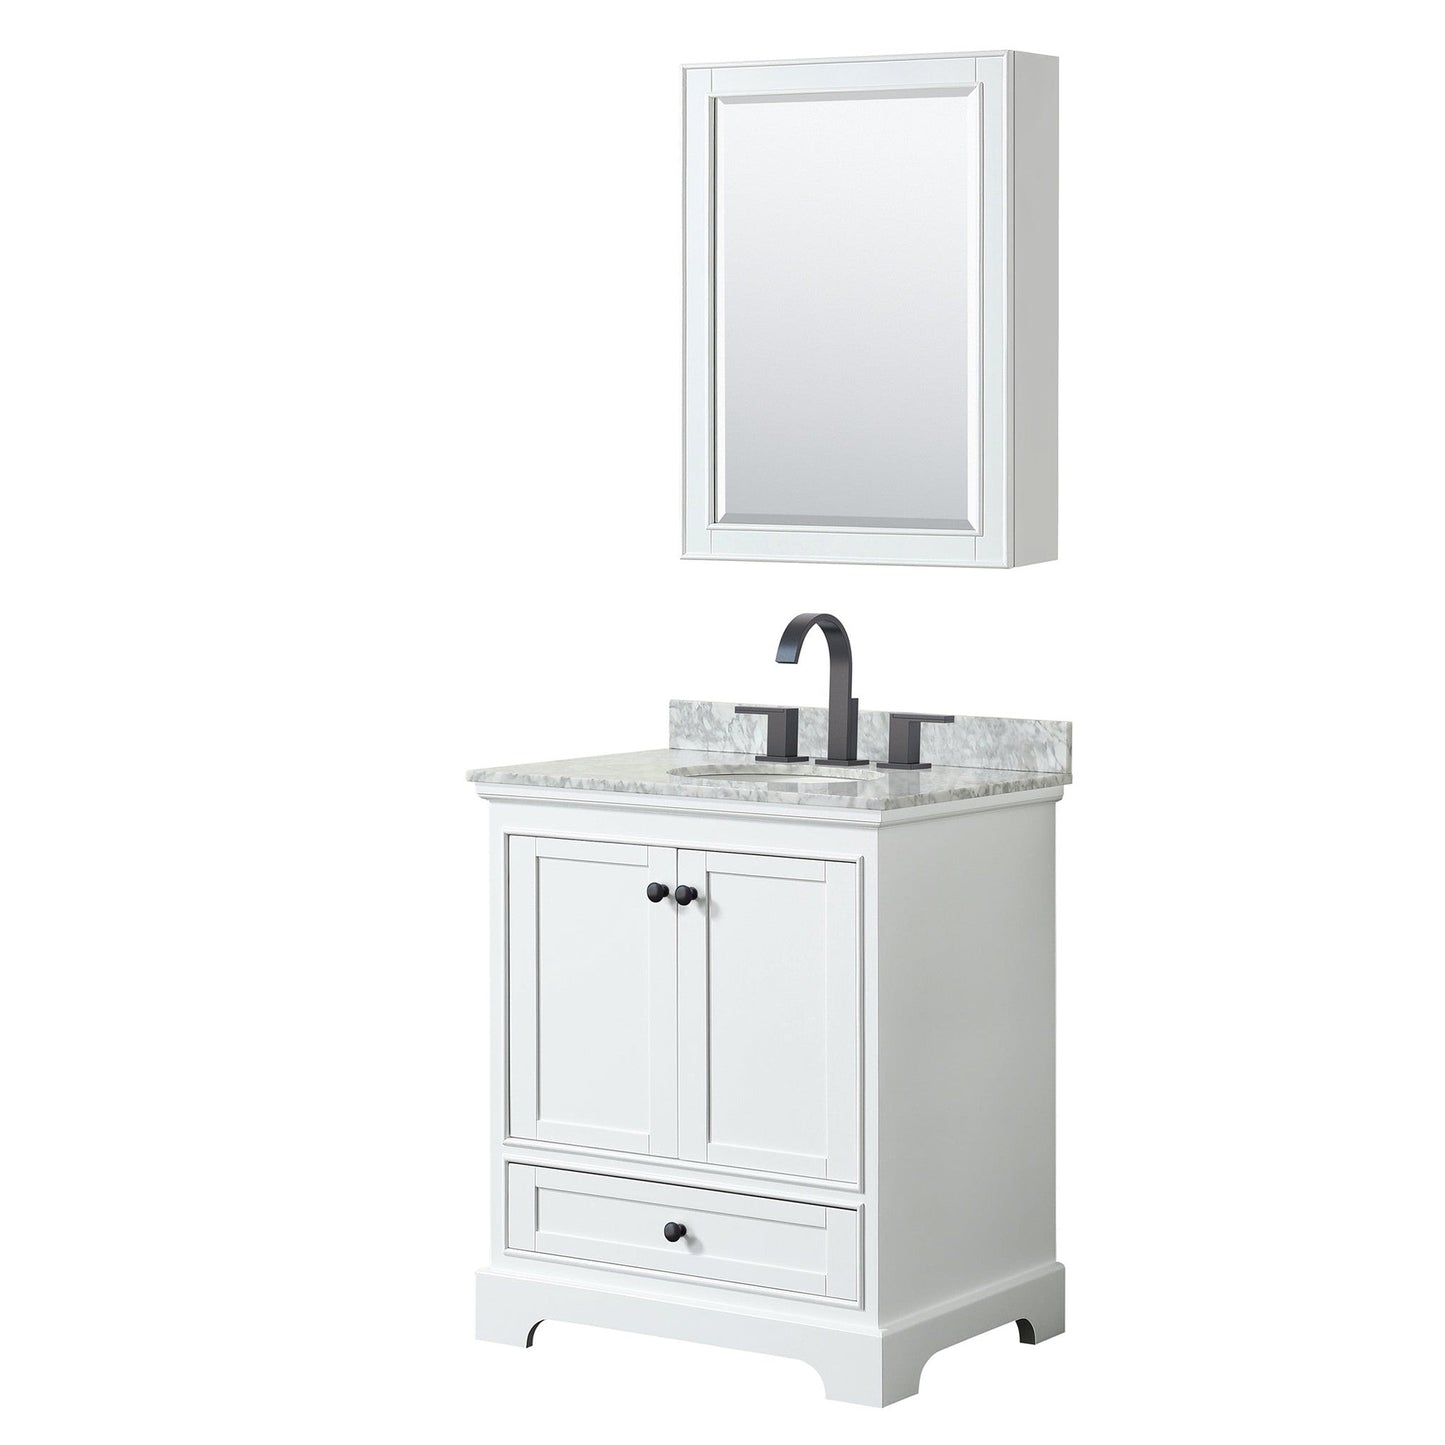 Deborah 30" Single Bathroom Vanity in White, White Carrara Marble Countertop, Undermount Oval Sink, Matte Black Trim, Medicine Cabinet